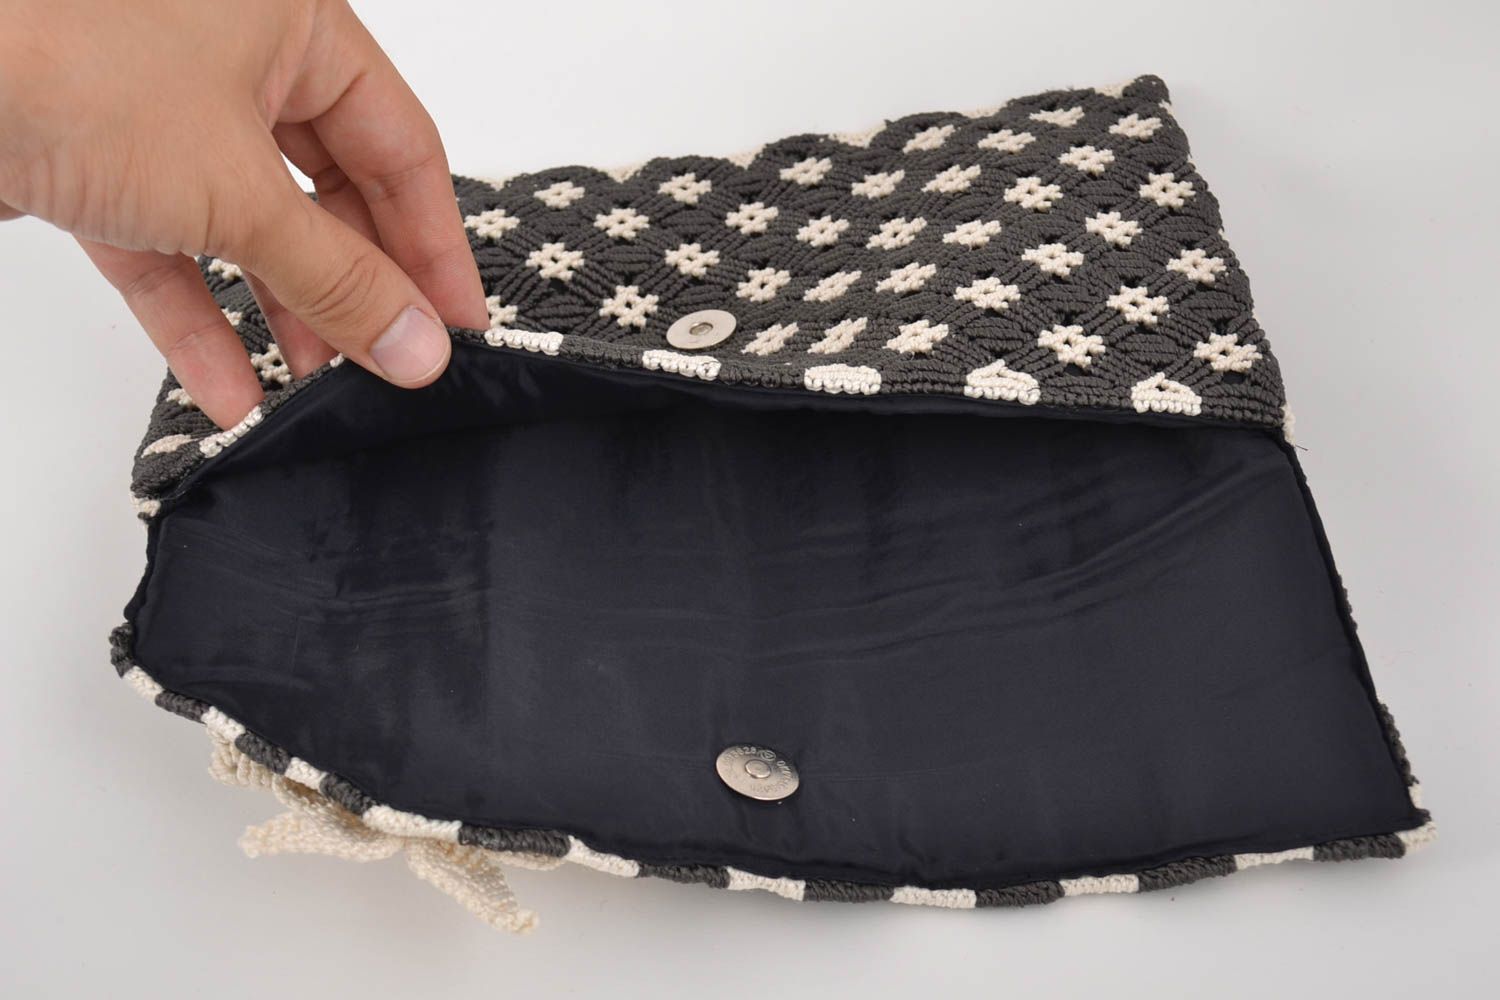 Handmade designer small women's macrame woven black and white clutch purse photo 5